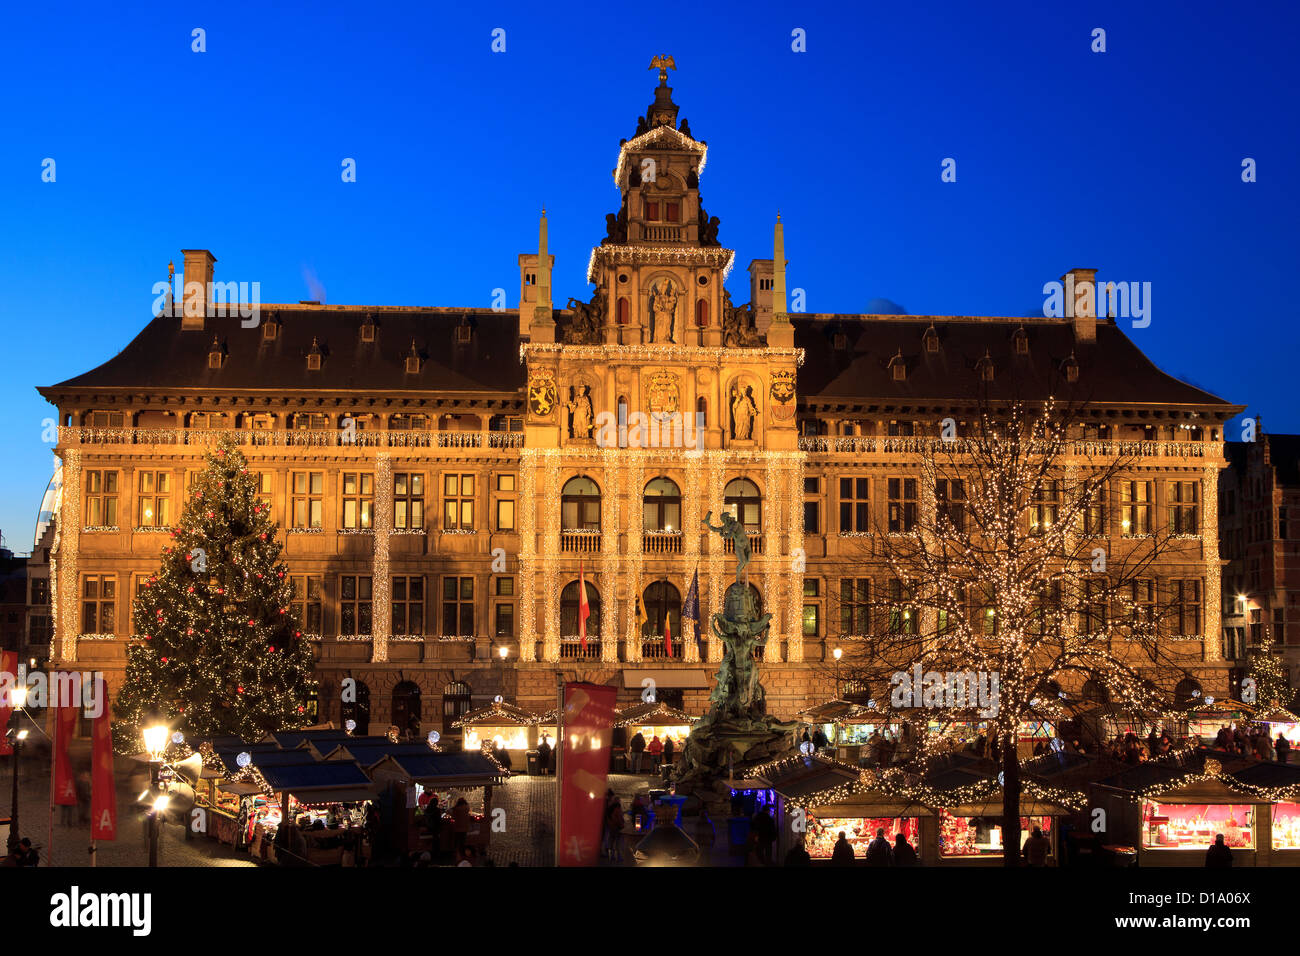 Antwerp Christmas Market Stock Photos & Antwerp Christmas ...